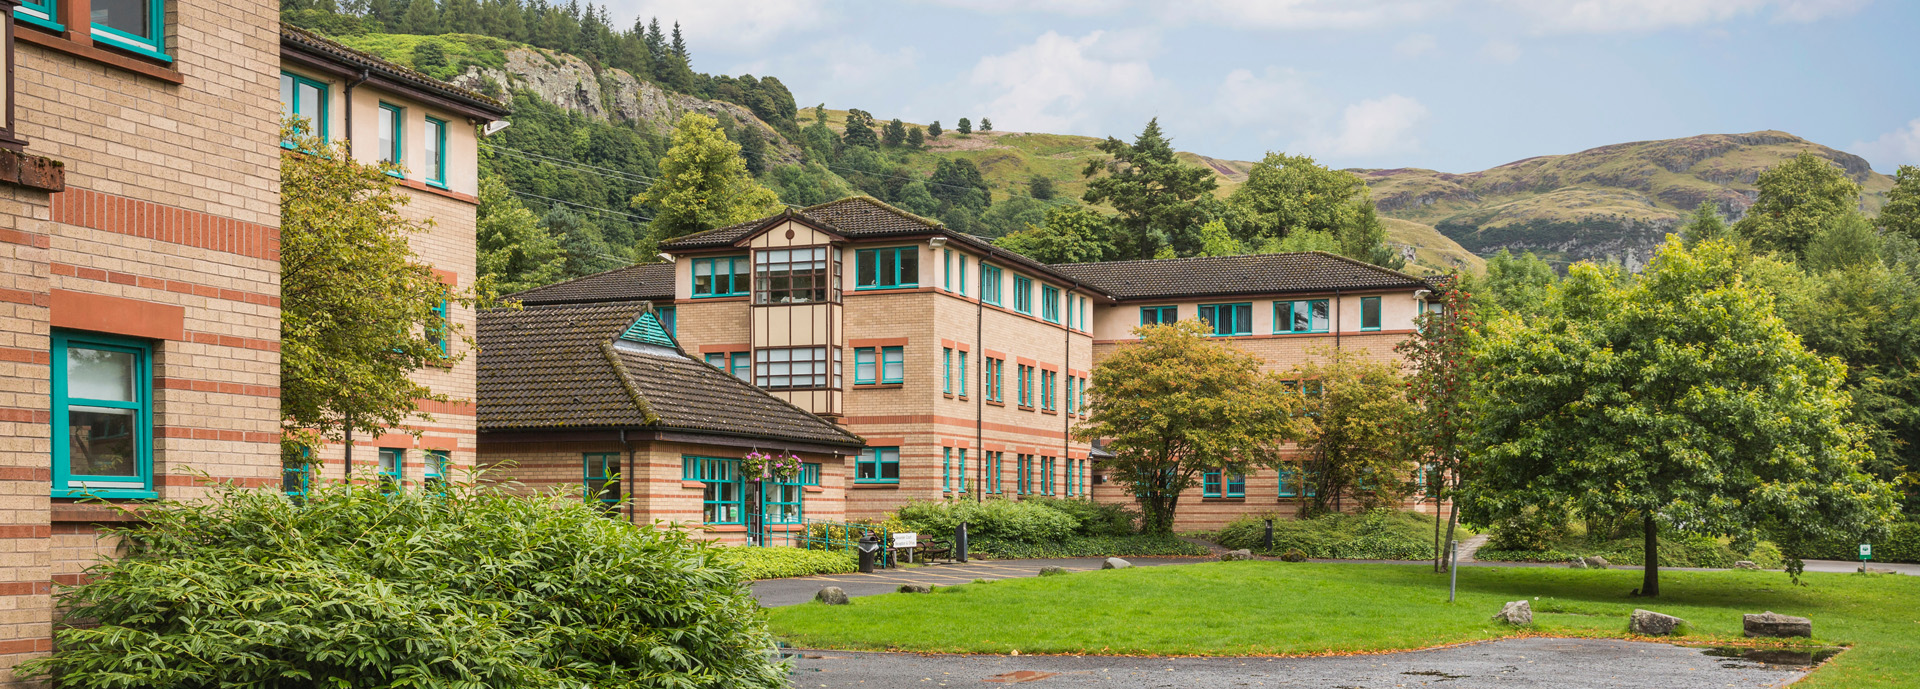 Alexander Court standard flats accommodation,  University of Stirling